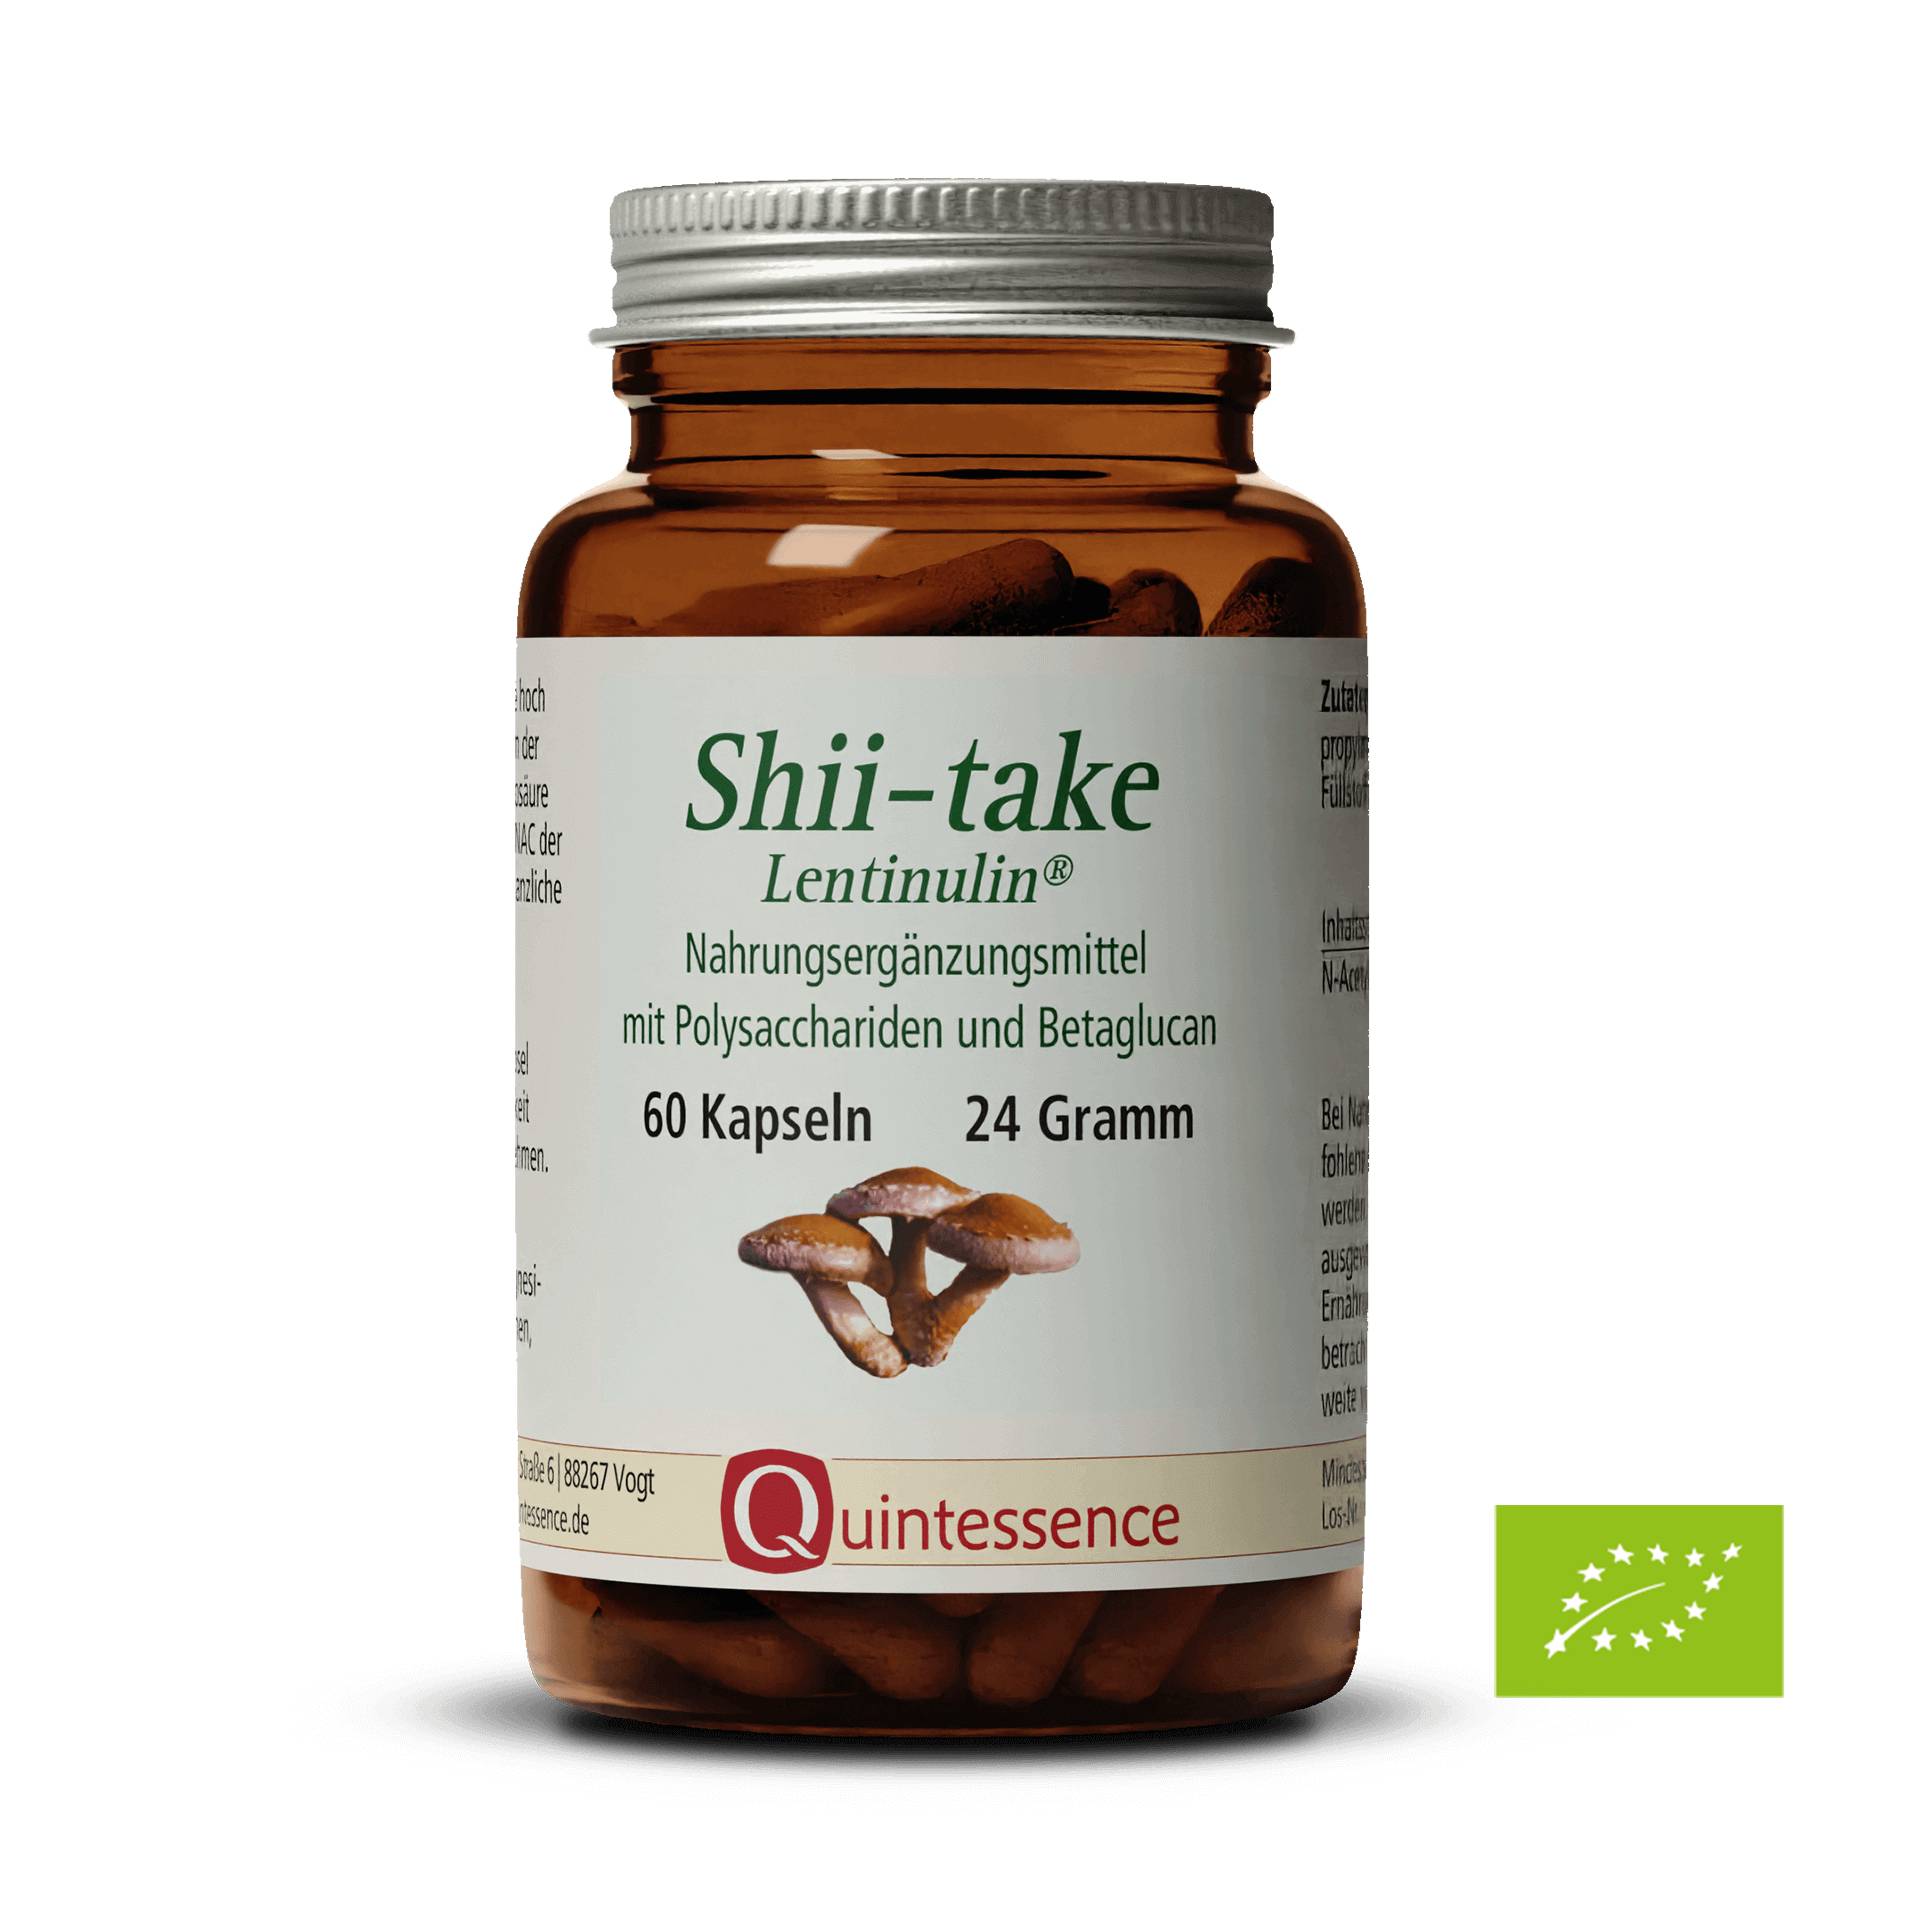 Shii-take - Lentinulin Bio 60 Kapseln - Extrakt aus Shii-take-Pilz - Herstellung Prof. Dr. Lelley - Vegan - Quintessence von Quintessence